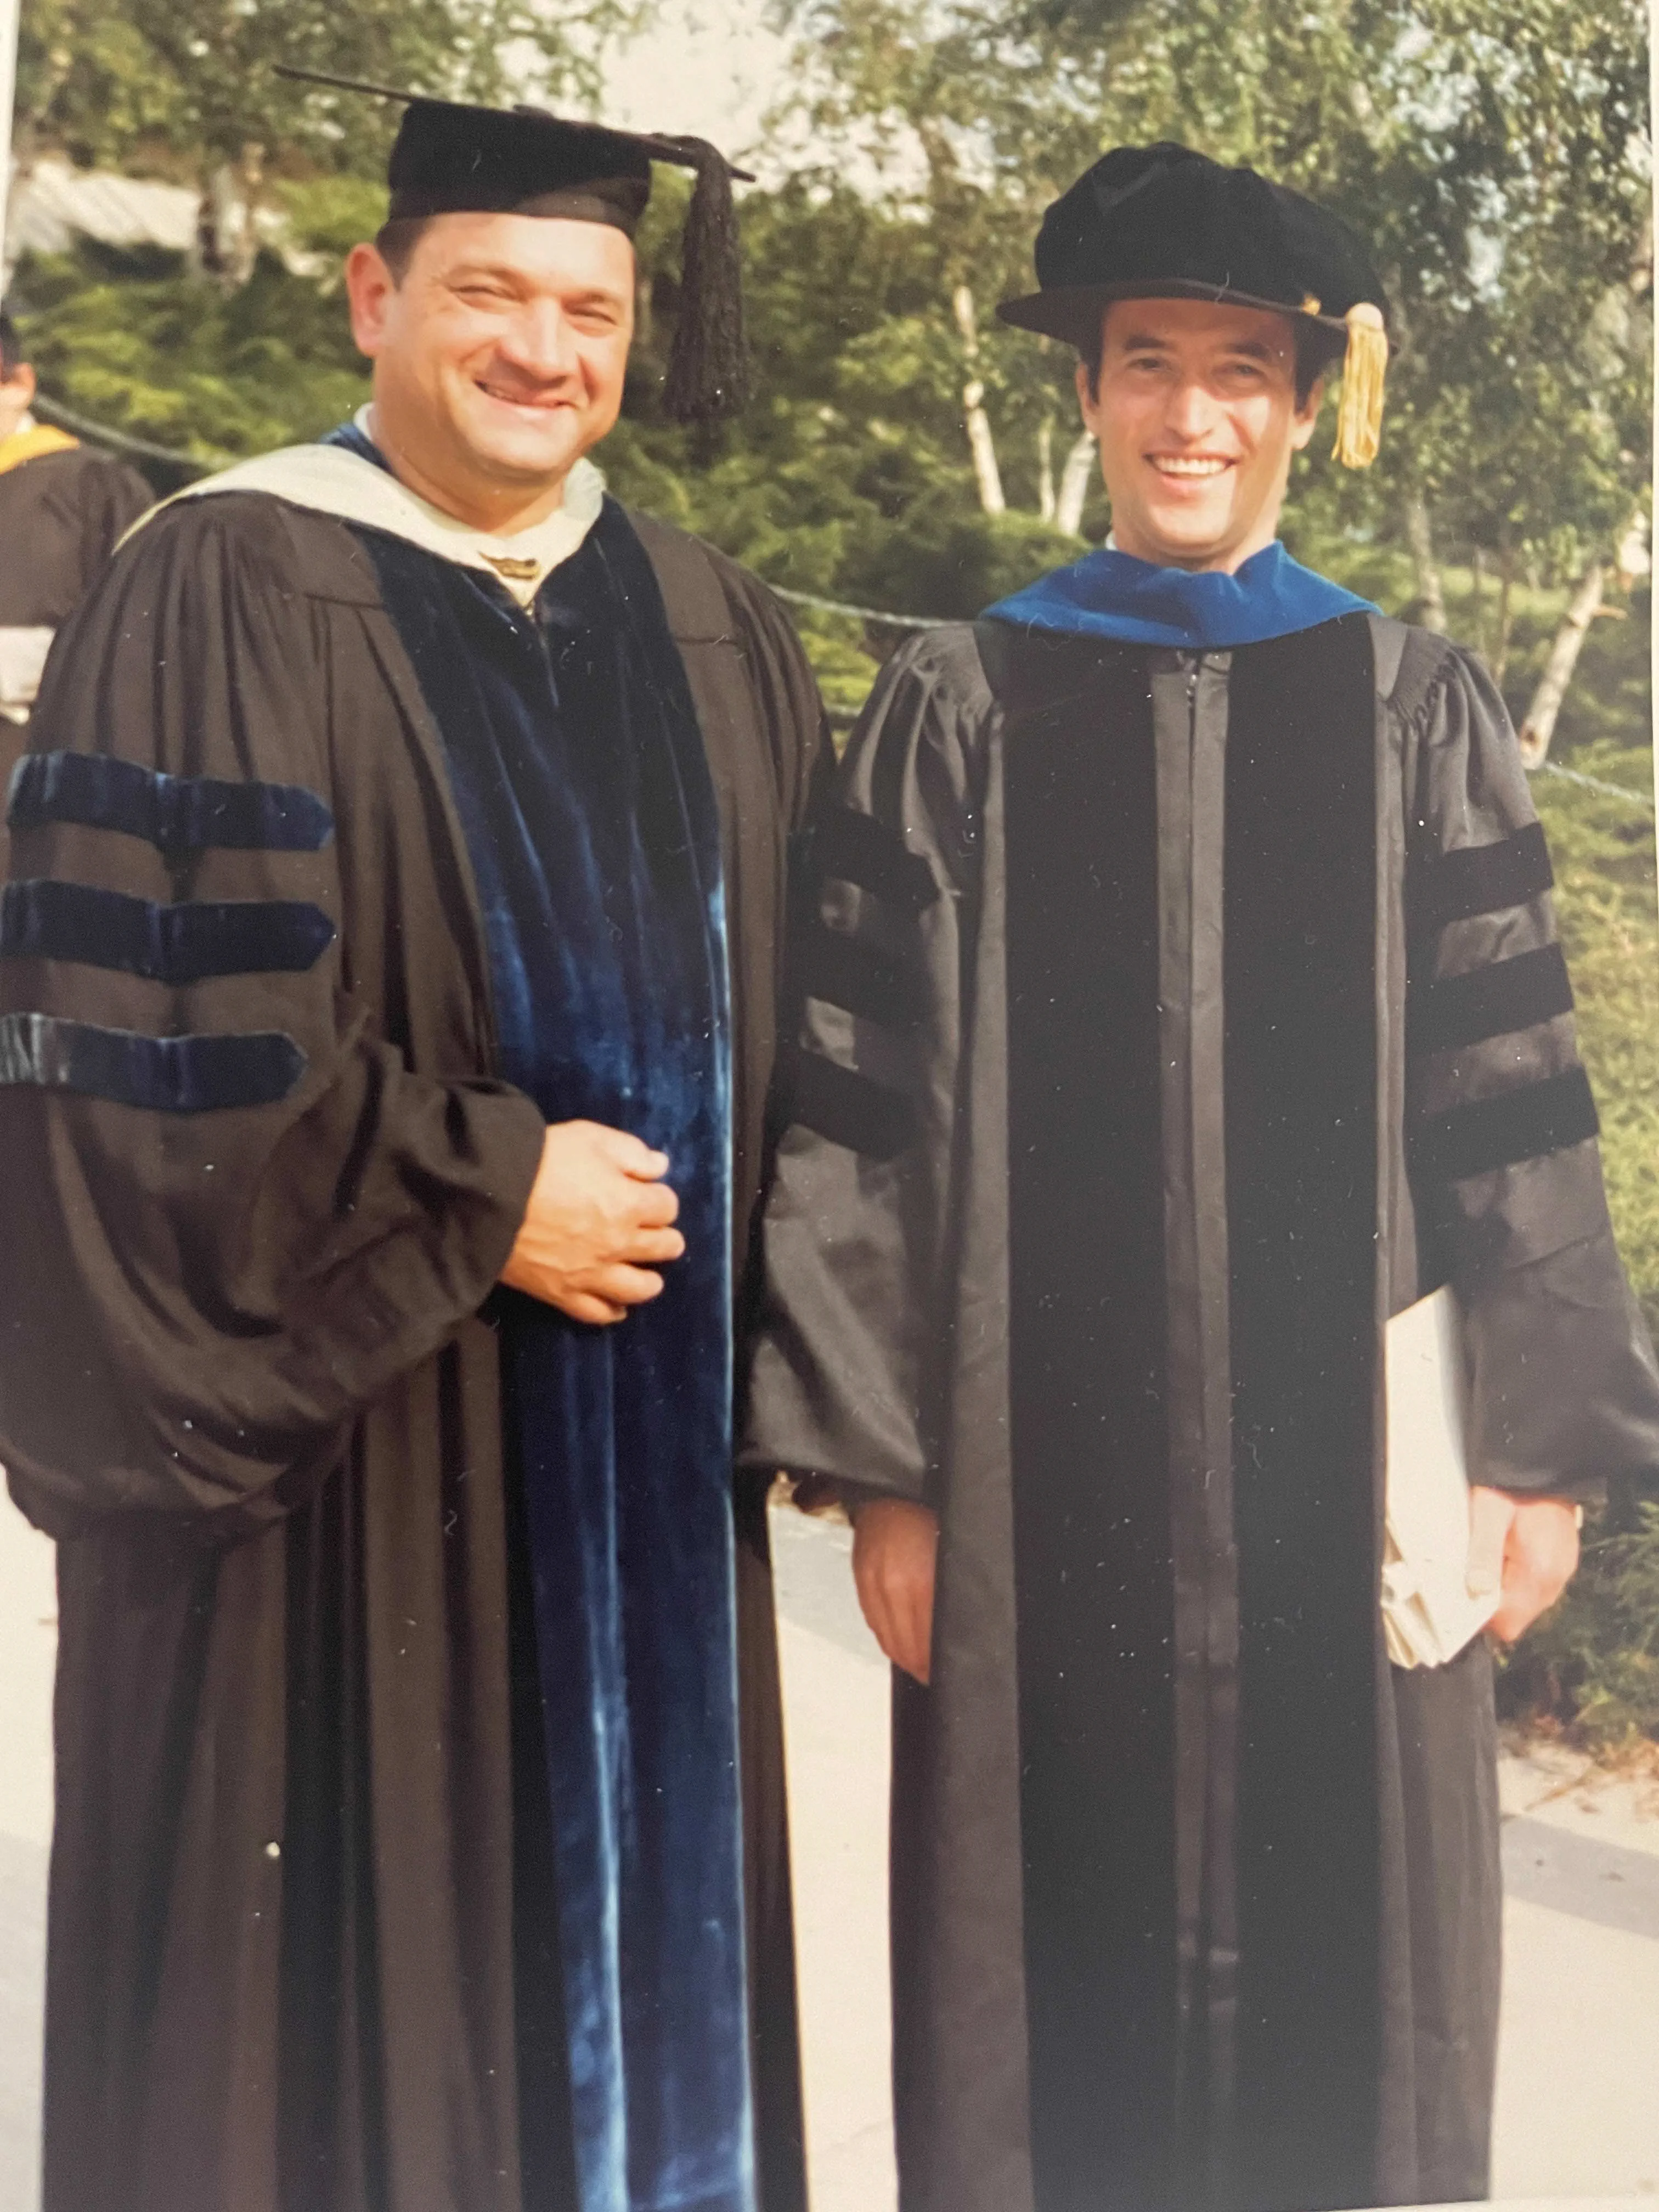 Bahram Zamani (right) with his advisor Bernie E. Knezek at the MSU graduation ceremony on June 12, 1982